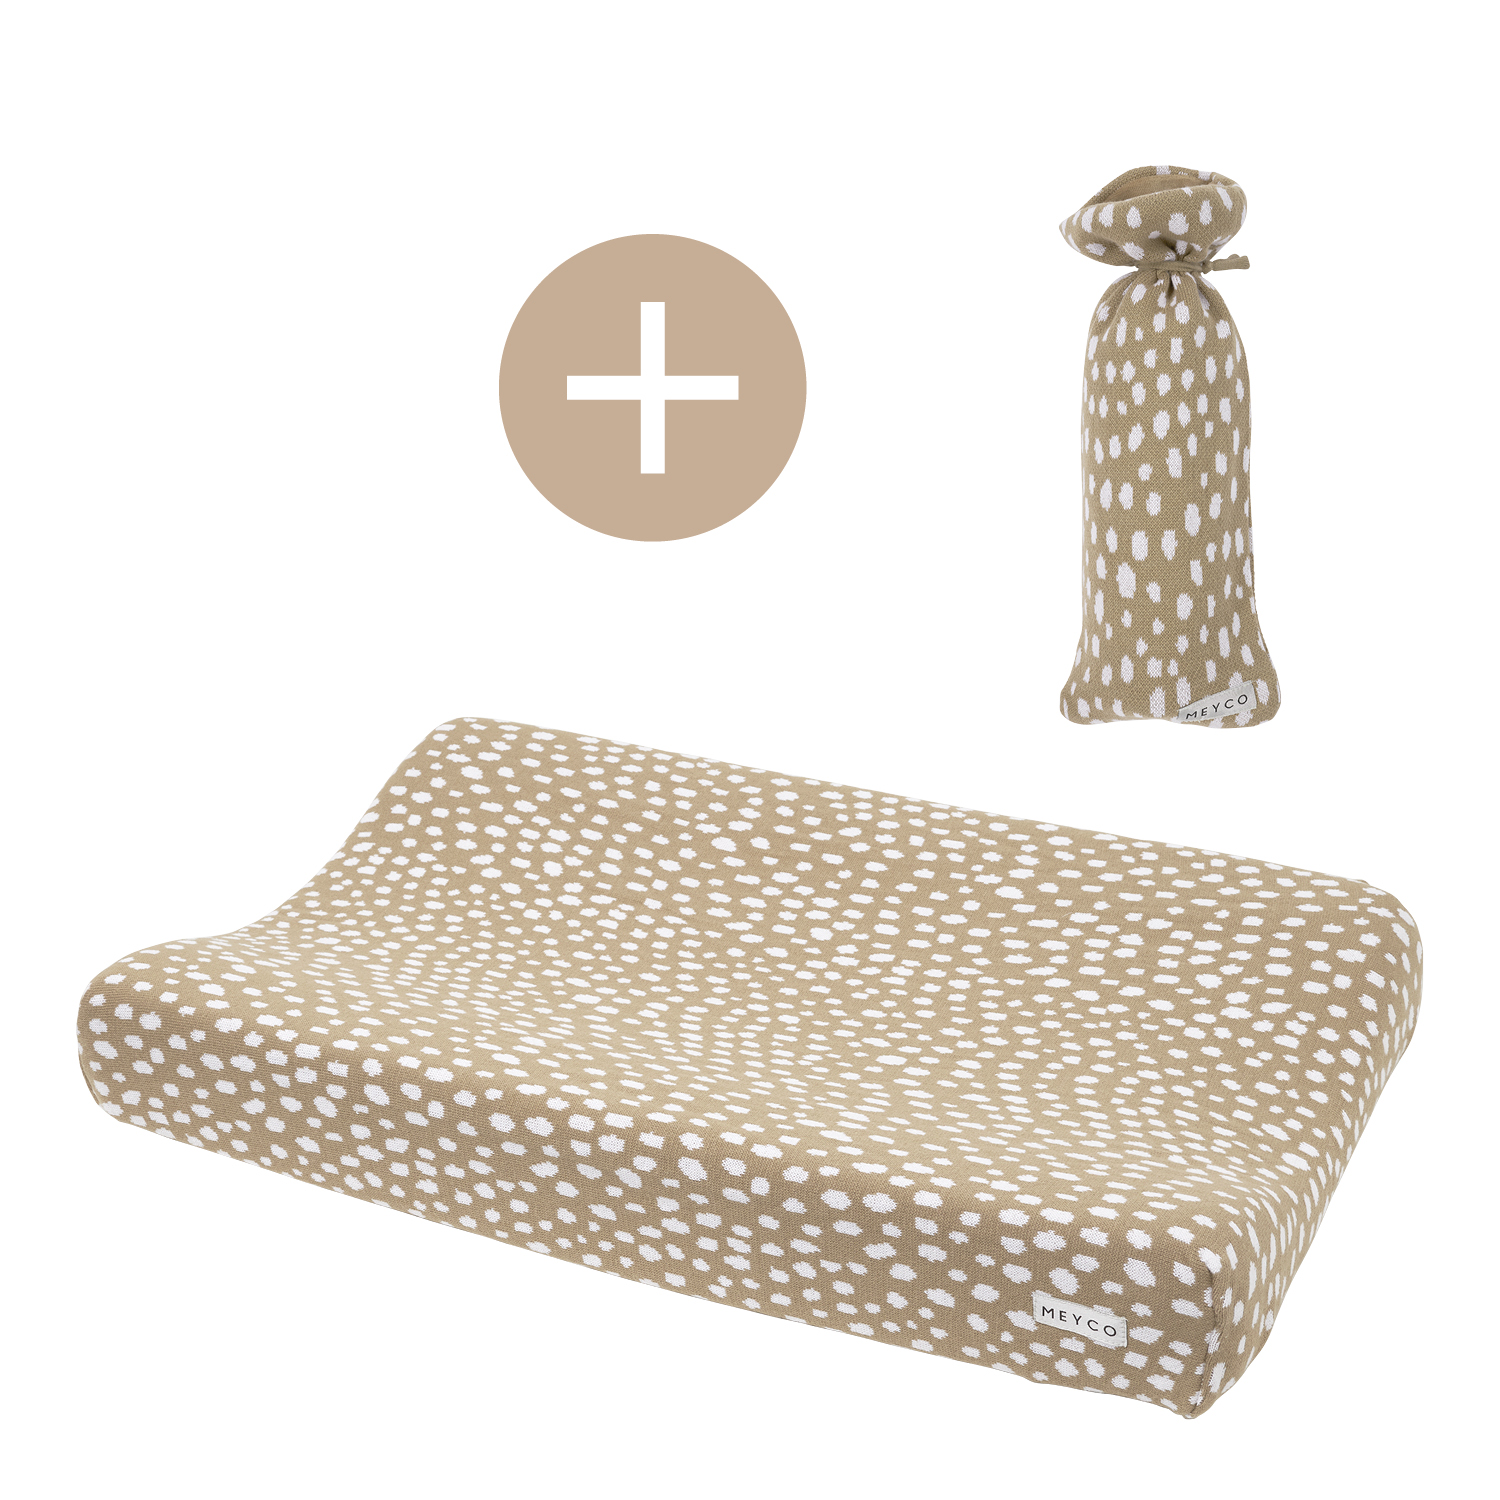 Wickelauflagenbezug + Wärmflaschenbezug Cheetah - taupe - 50x70cm